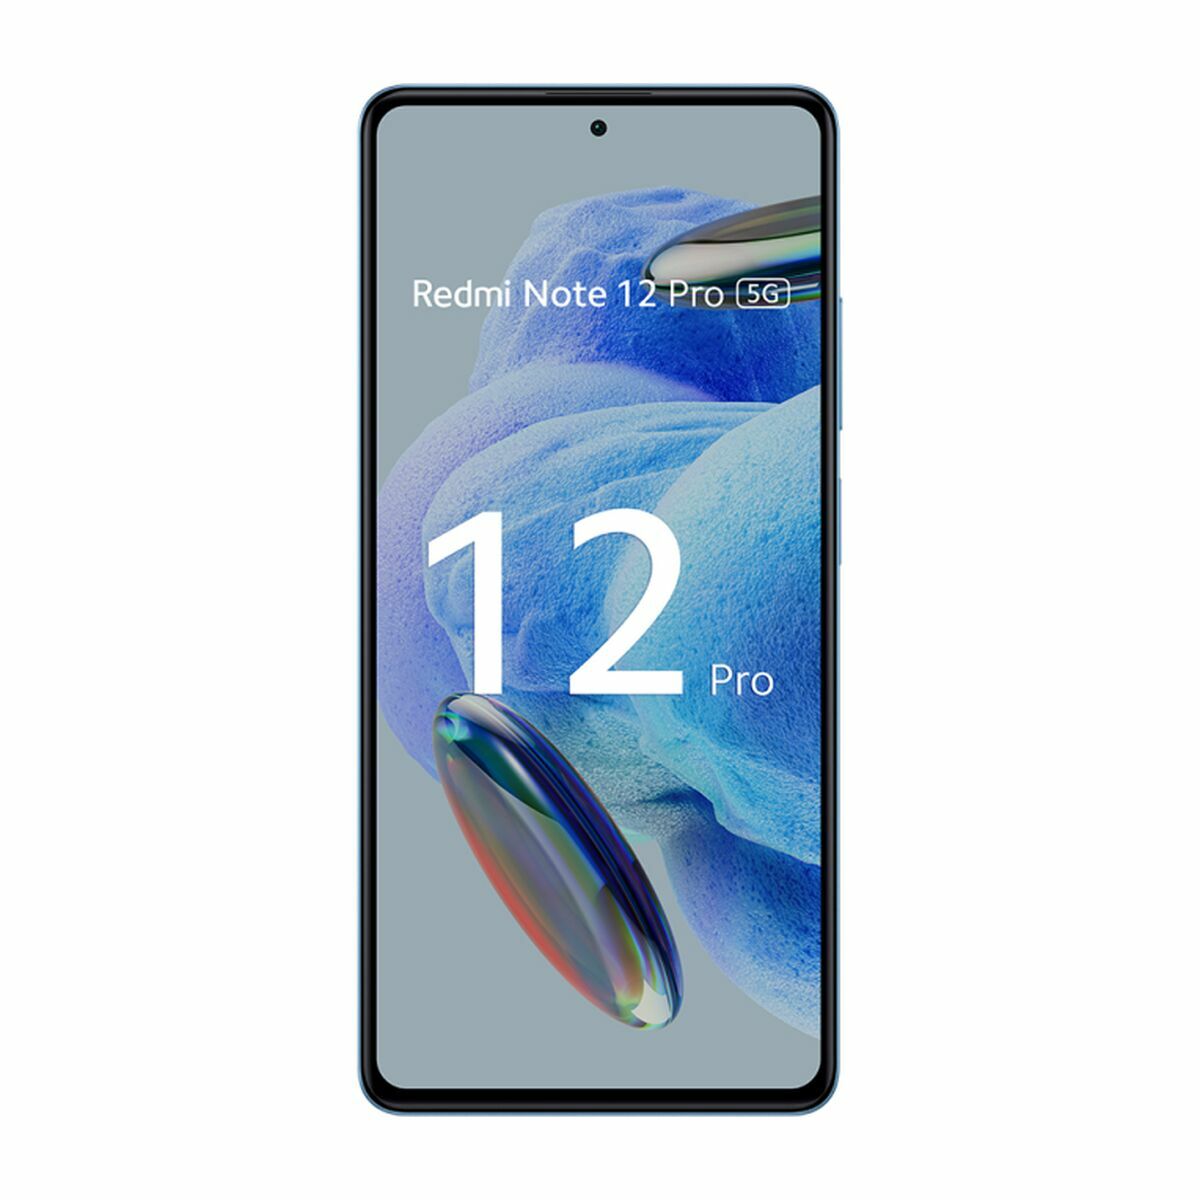 Smartphone Xiaomi Note 12 Pro 5G 6,67" MediaTek Dimensity 1080 6 GB RAM 128 GB Blau Celeste Sky Blue - CA International 